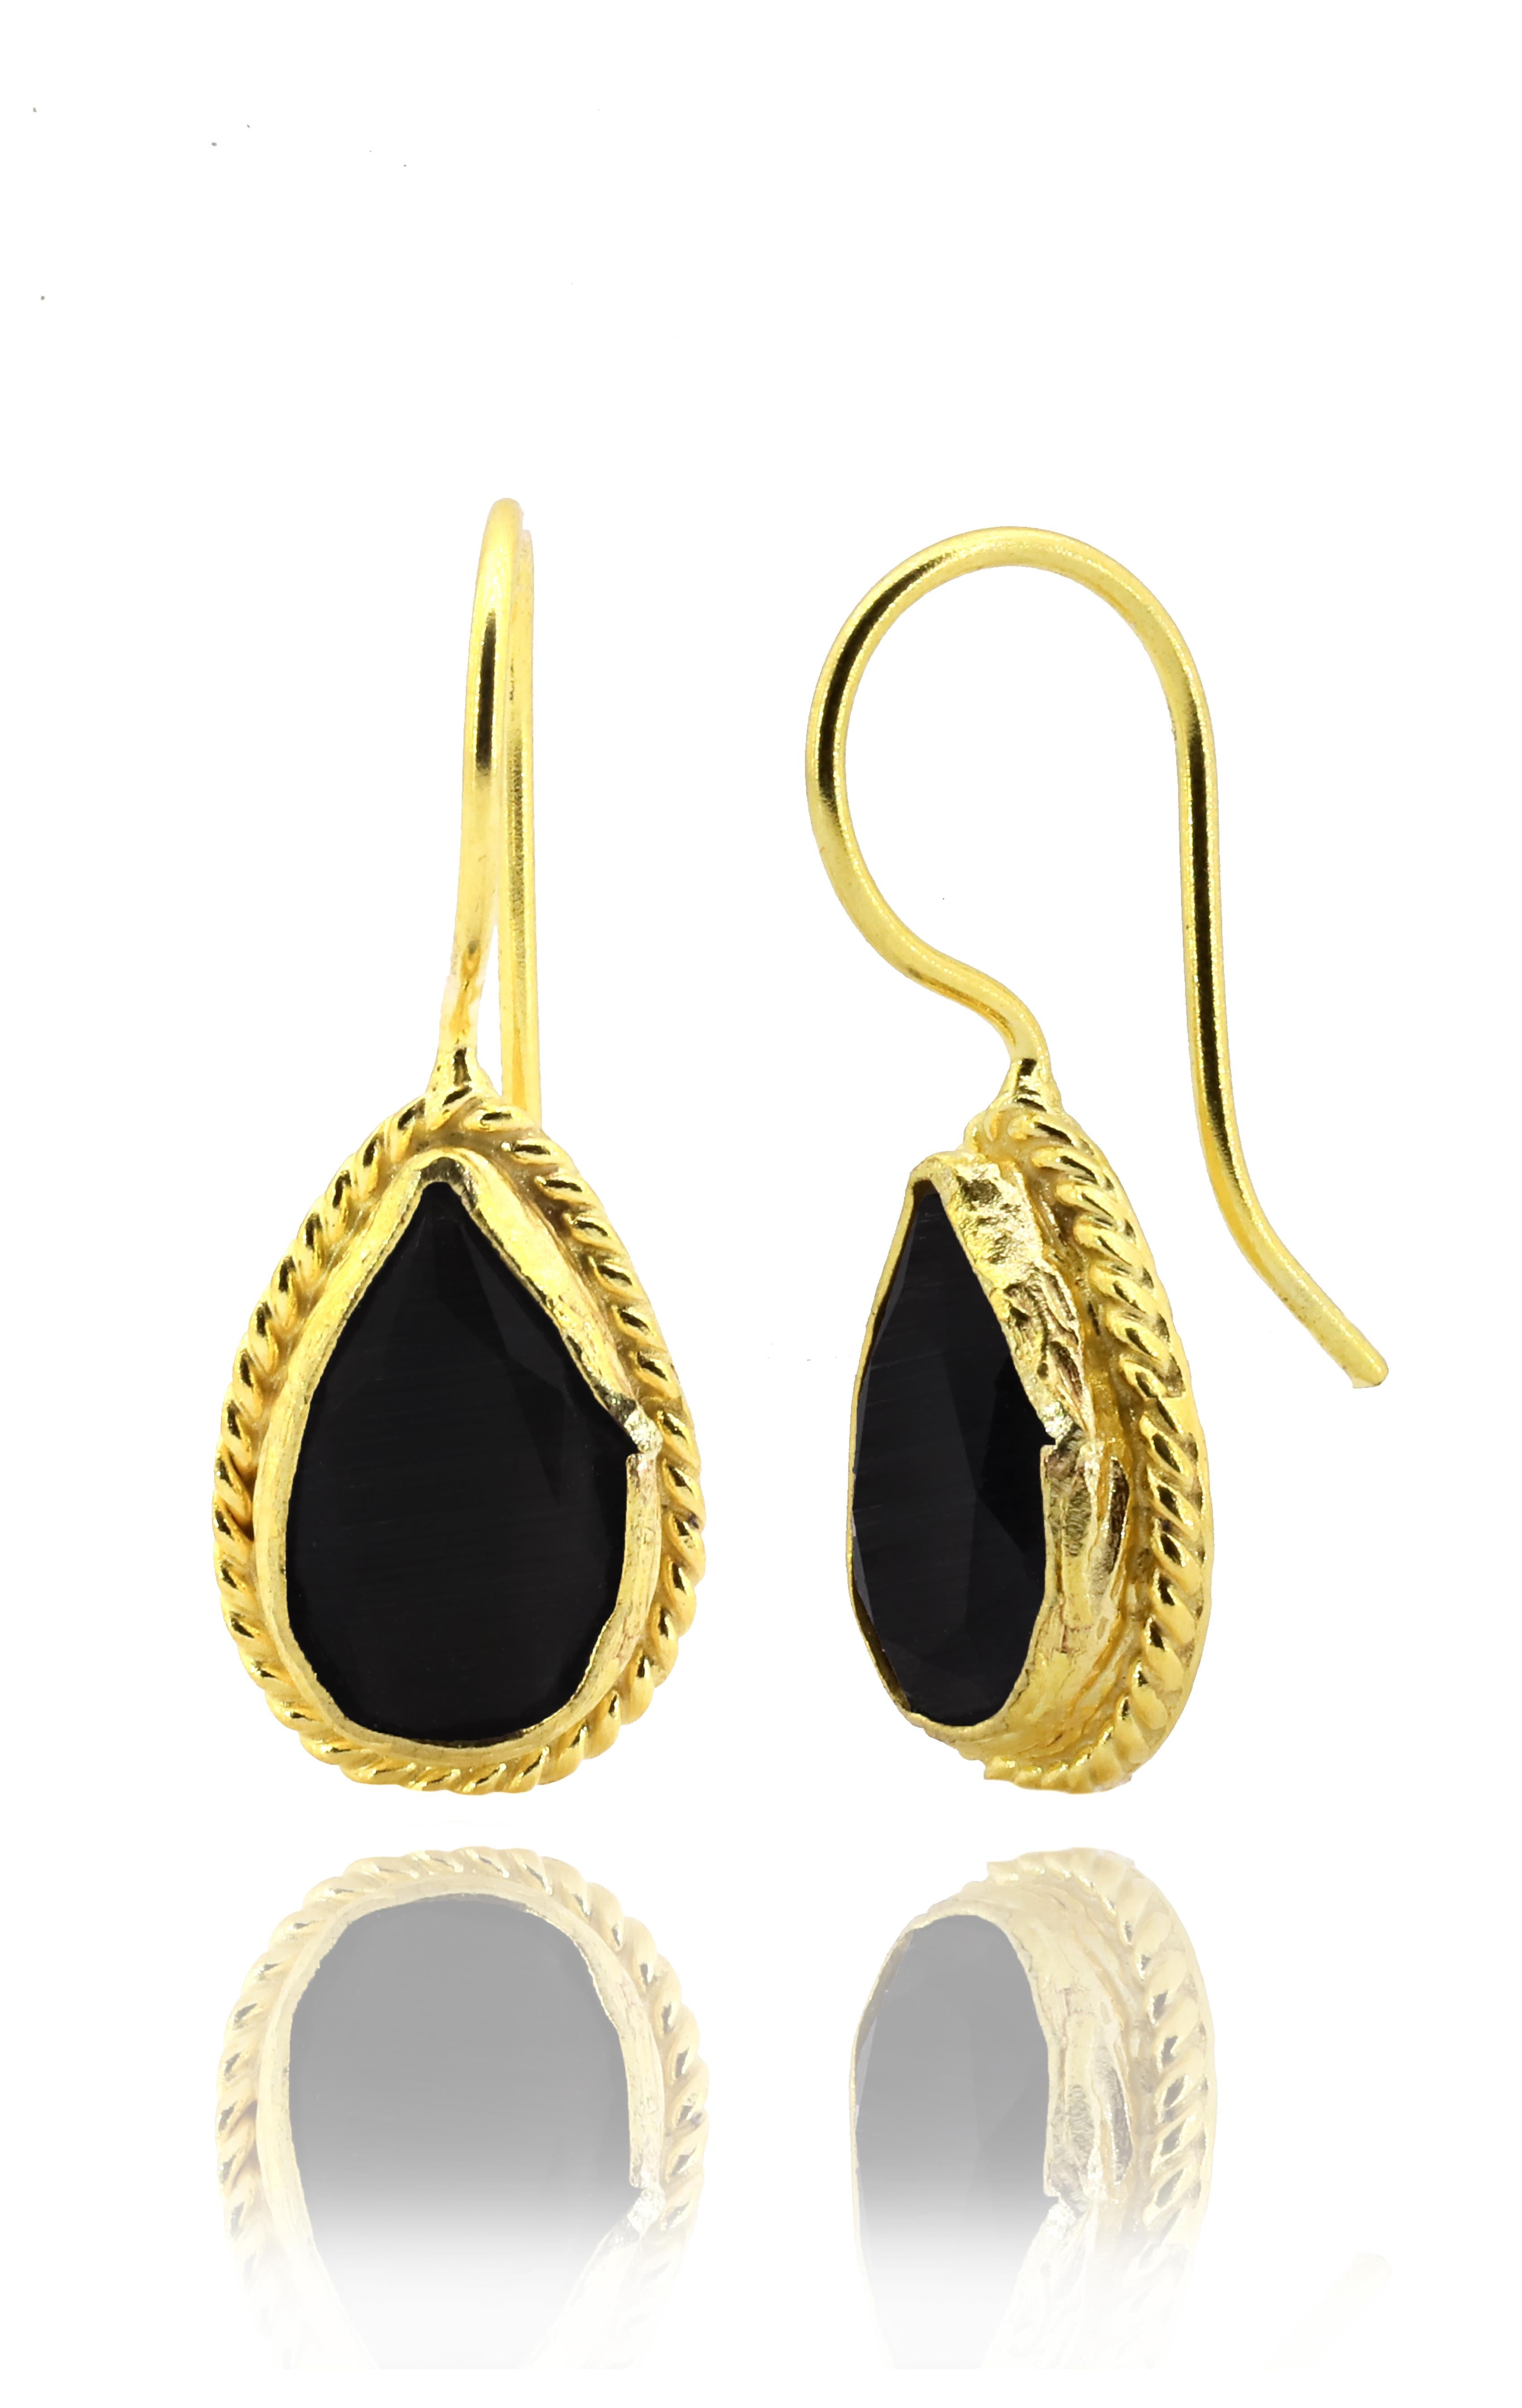 SUNSTONE -Serie Wicking Black Drop Schnitt farbiger Onyx 22K Gold Plated Damen Set 925 Sterling Silber Kette